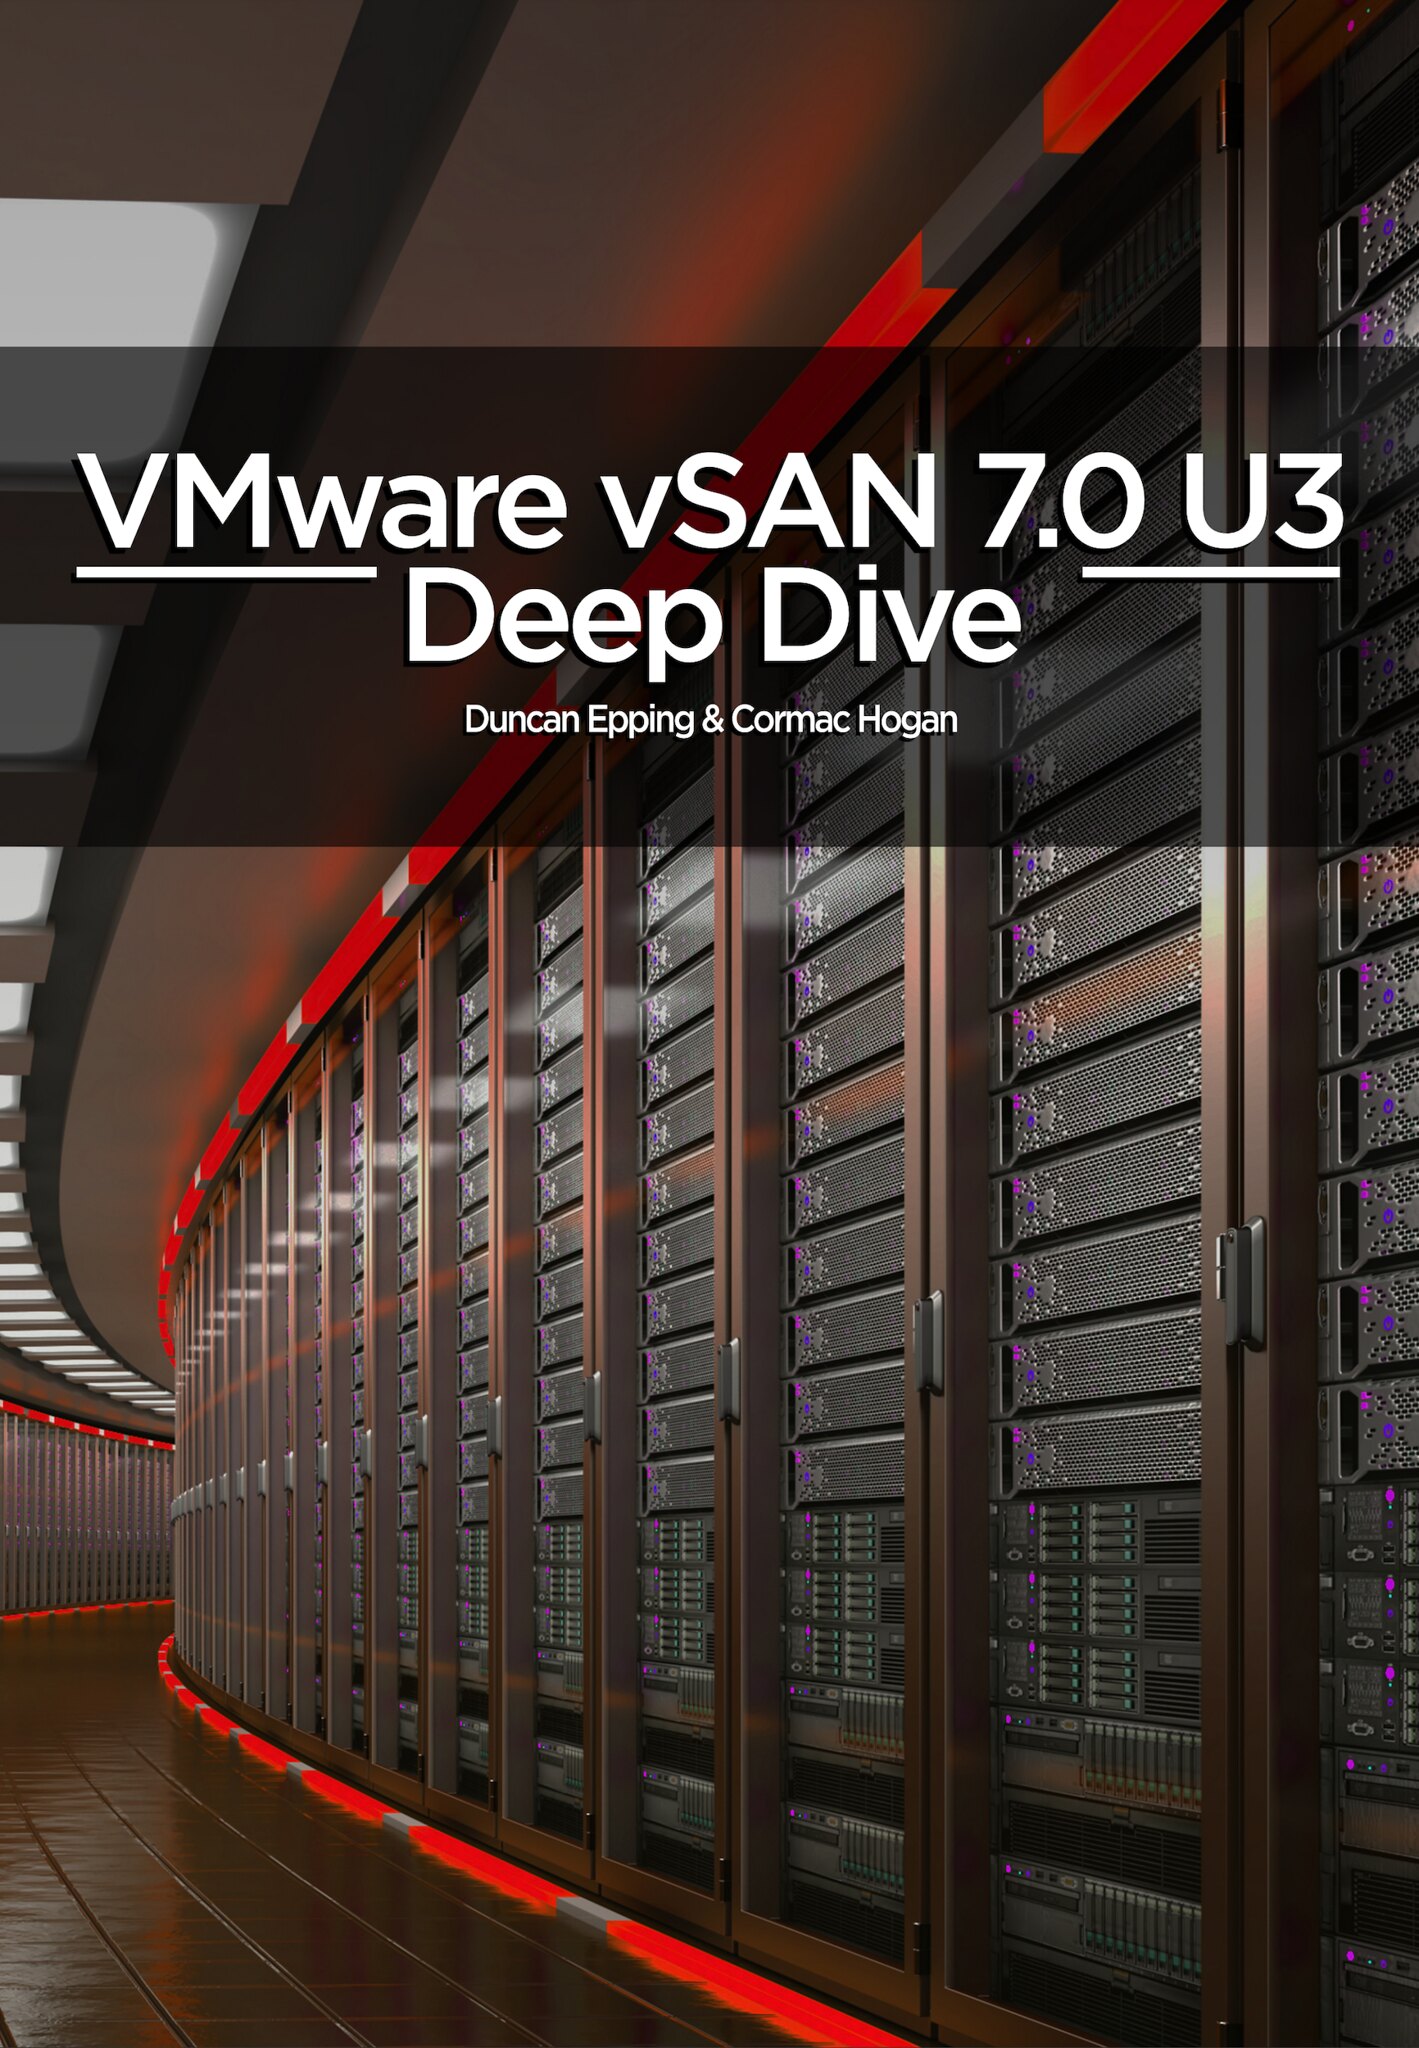 New book: VMware vSAN 7.0 U3 Deep Dive